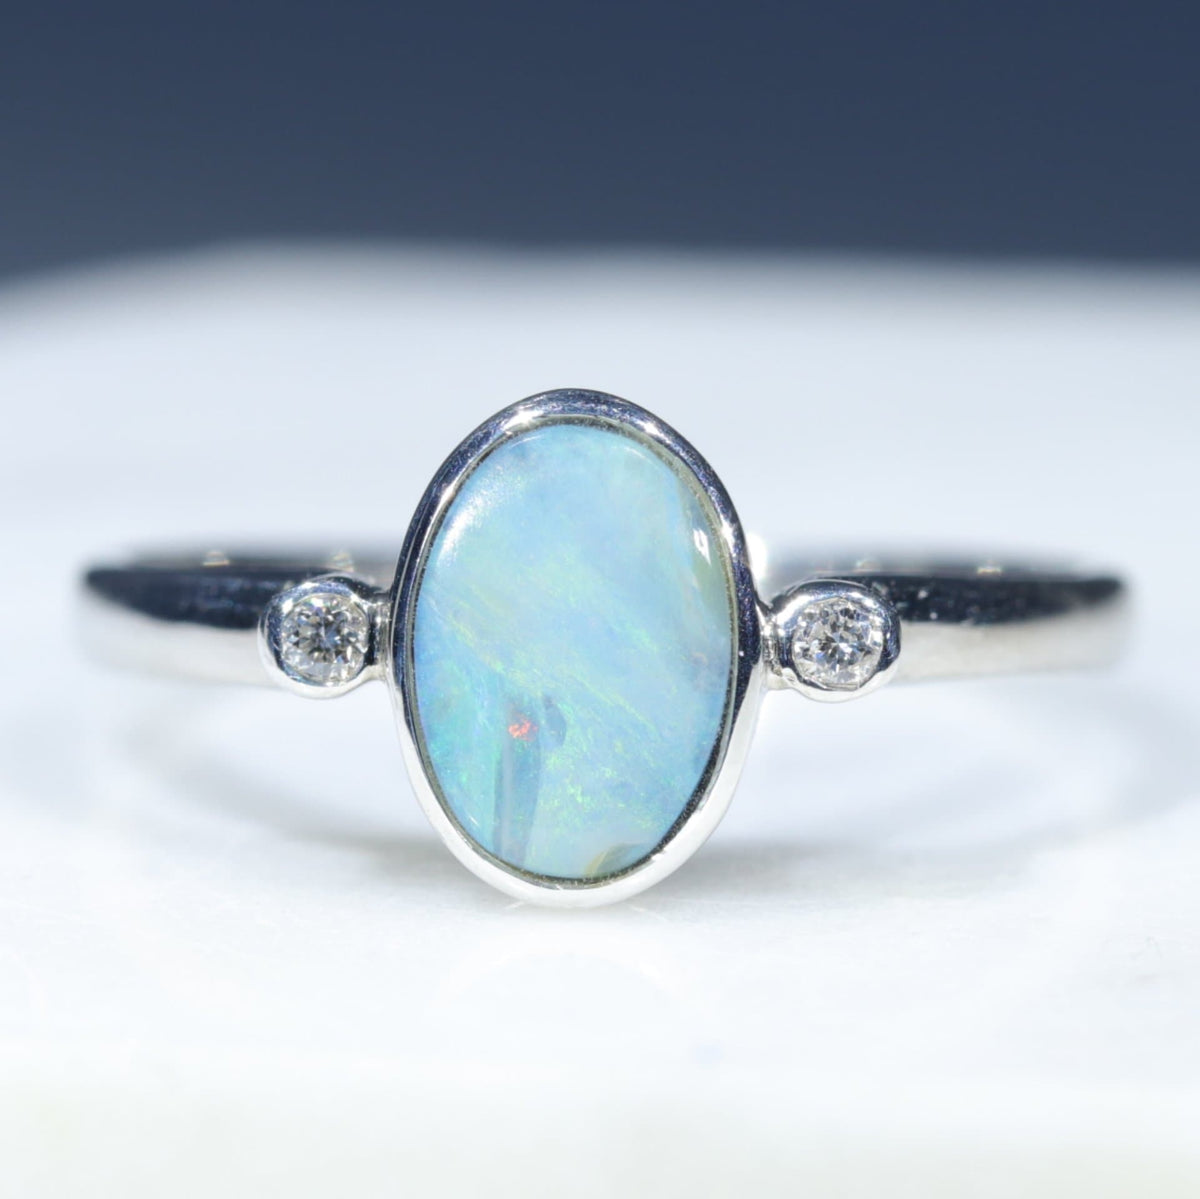 Australian Silver Opal and Diamond Ring - Size 6-25